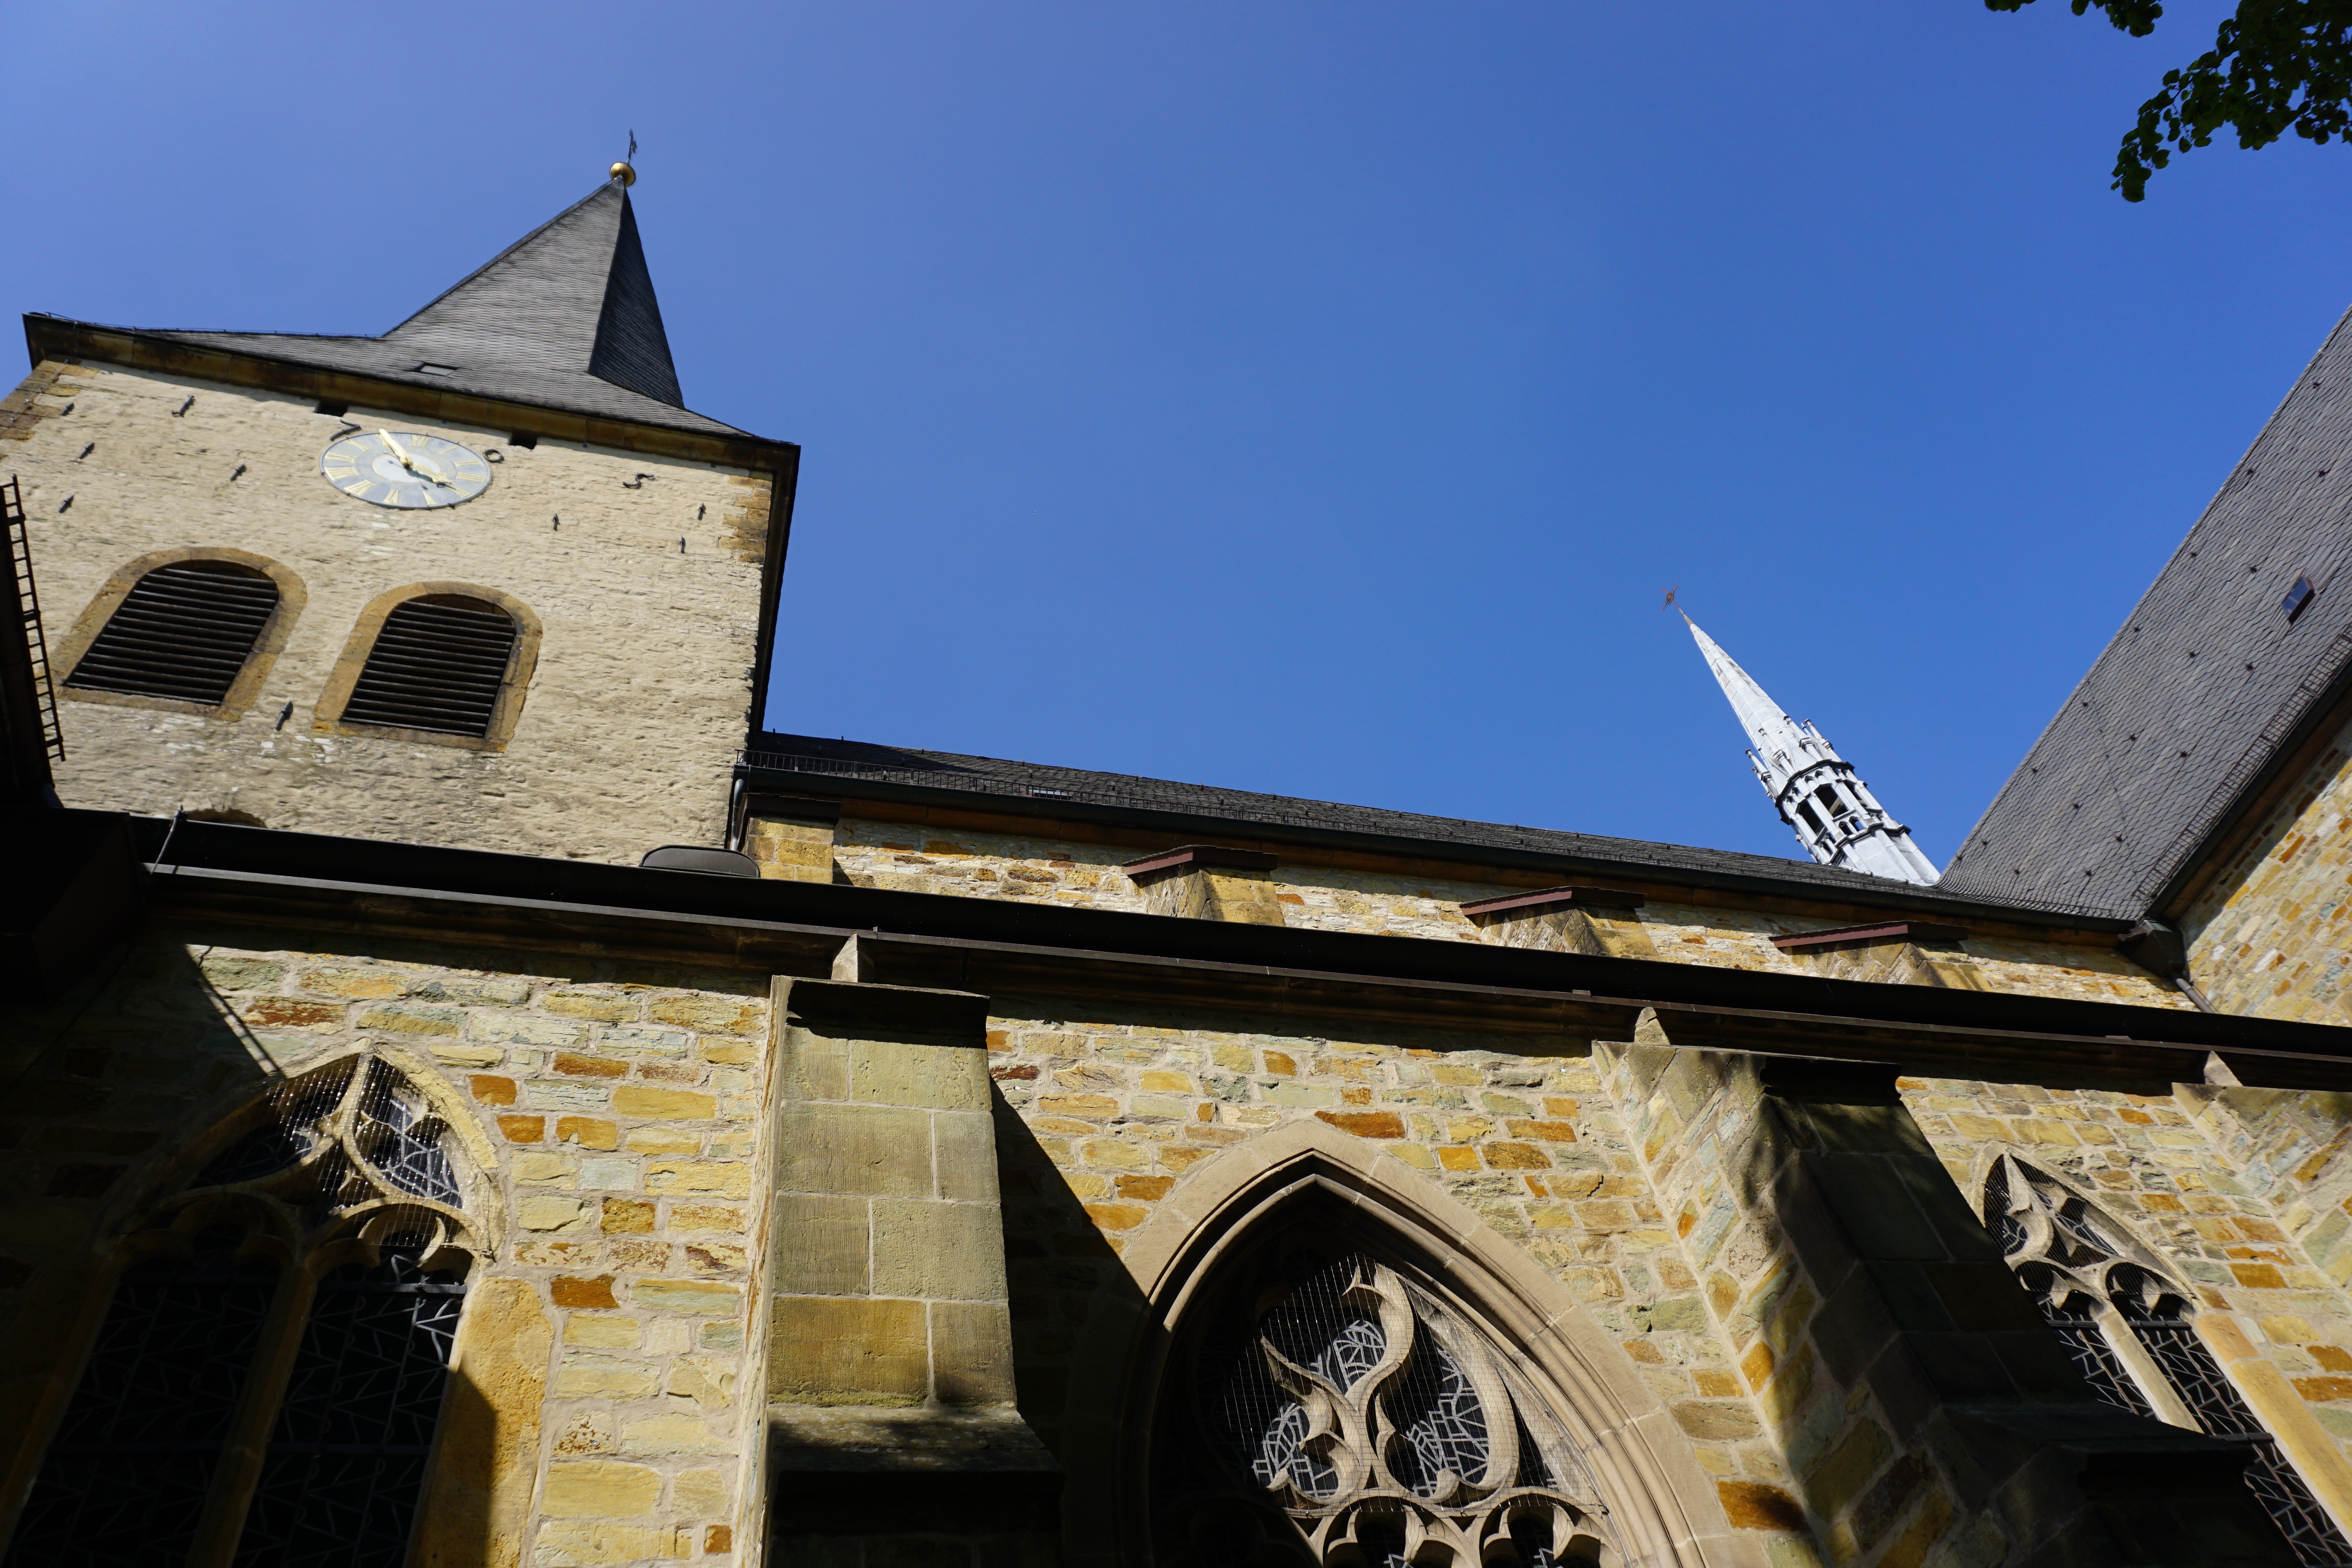 Kirche St. Christina in Herzebrock, Herzebrock-Clarholz.
